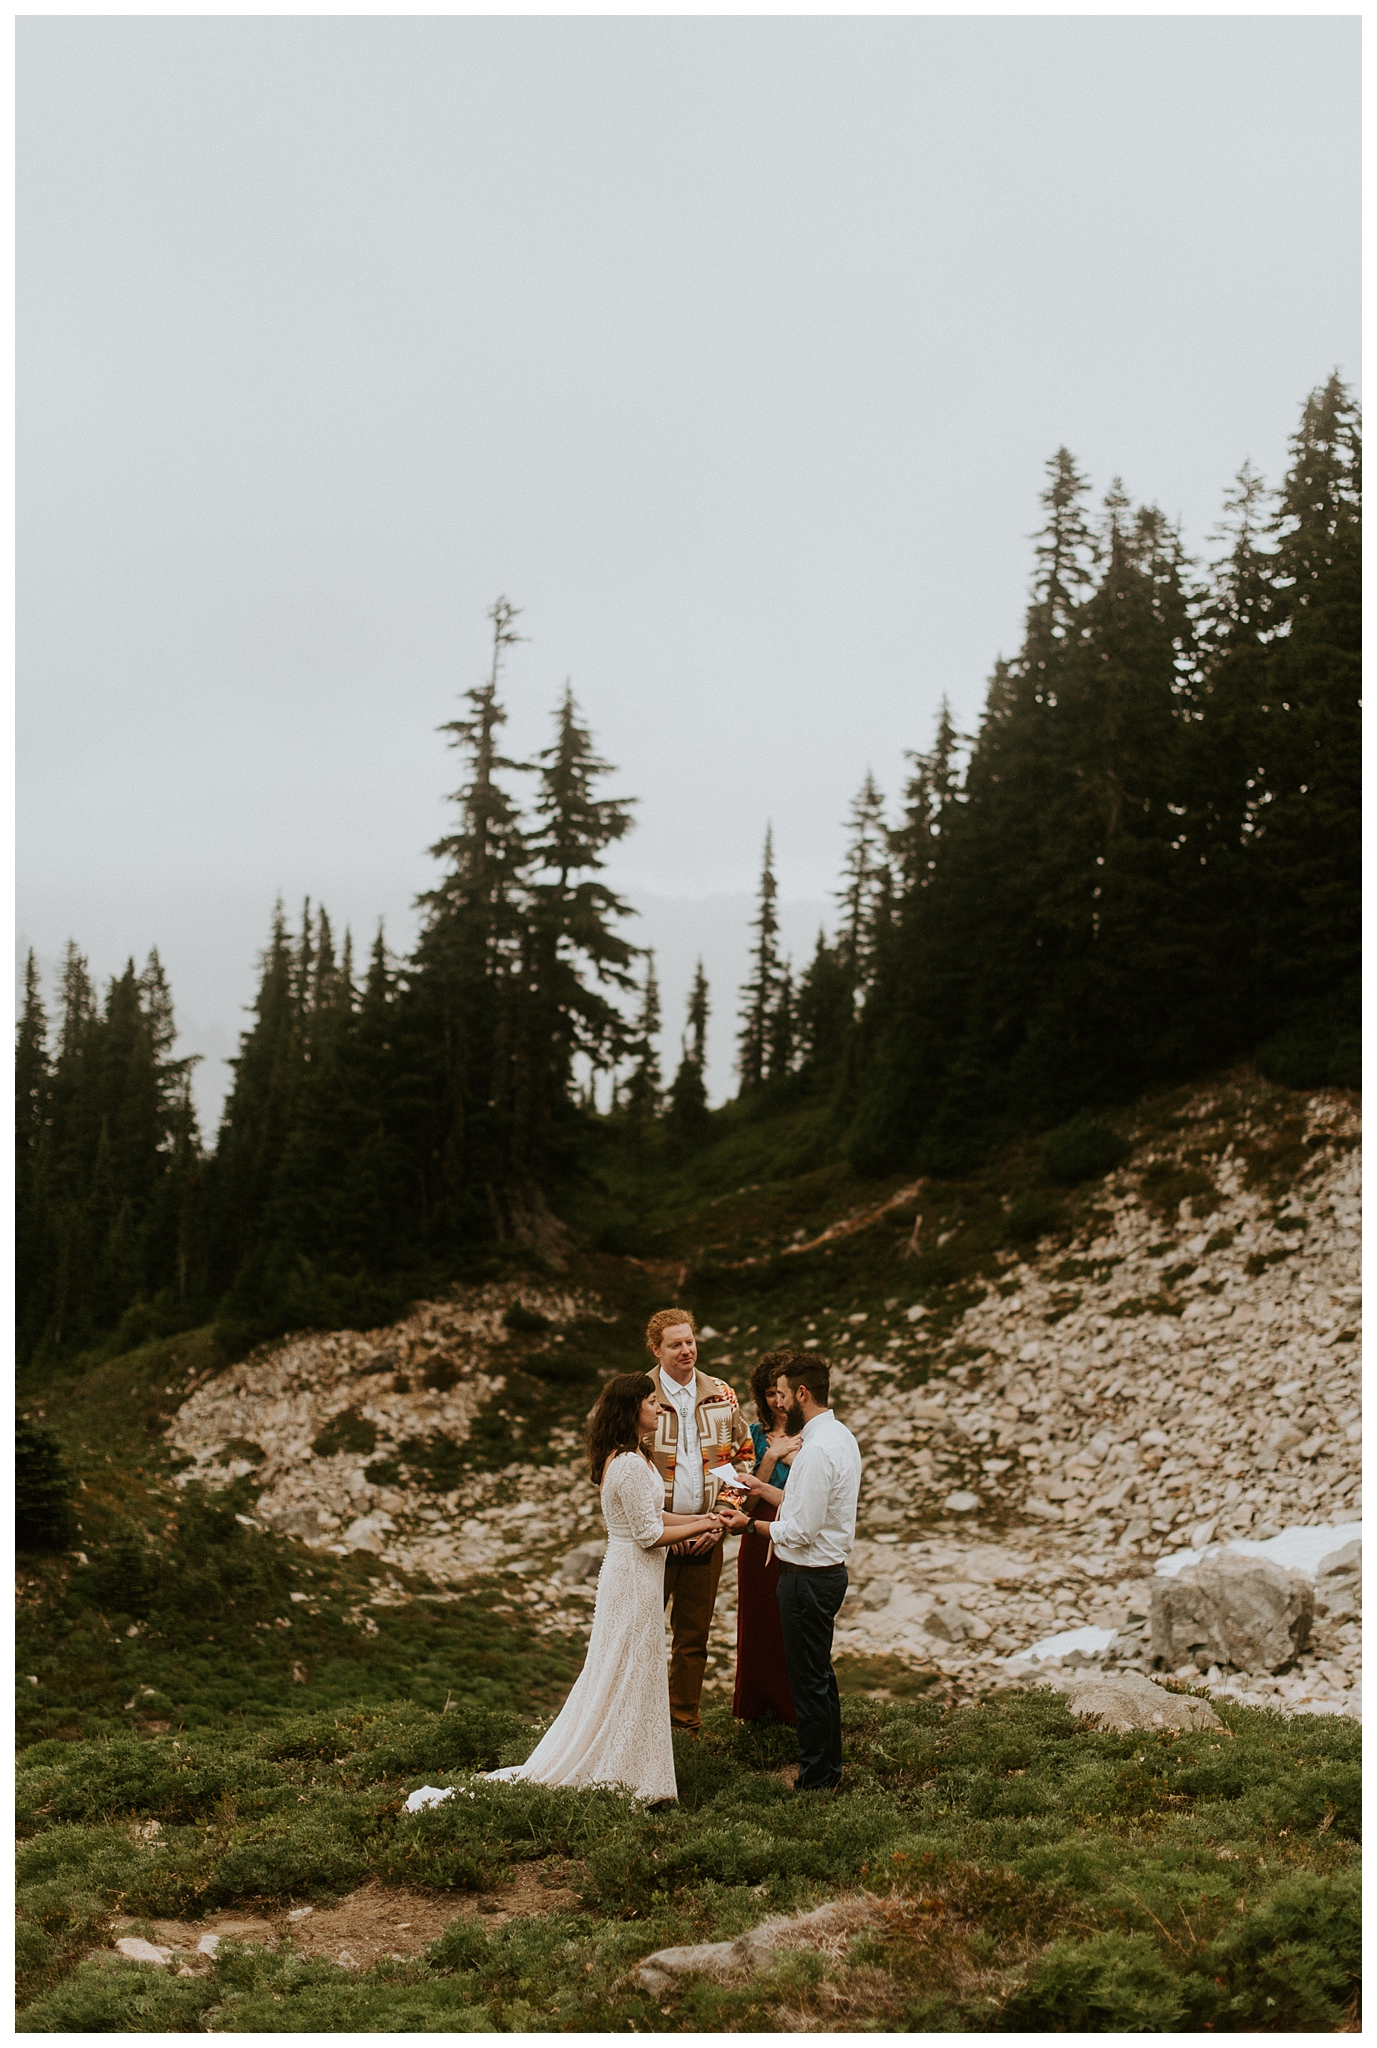 Pinnacle Peak Adventure Elopement at Mt. Rainier National Park by Seattle Elopement Photographer, Kamra Fuller Photography - Seattle Wedding Photographer